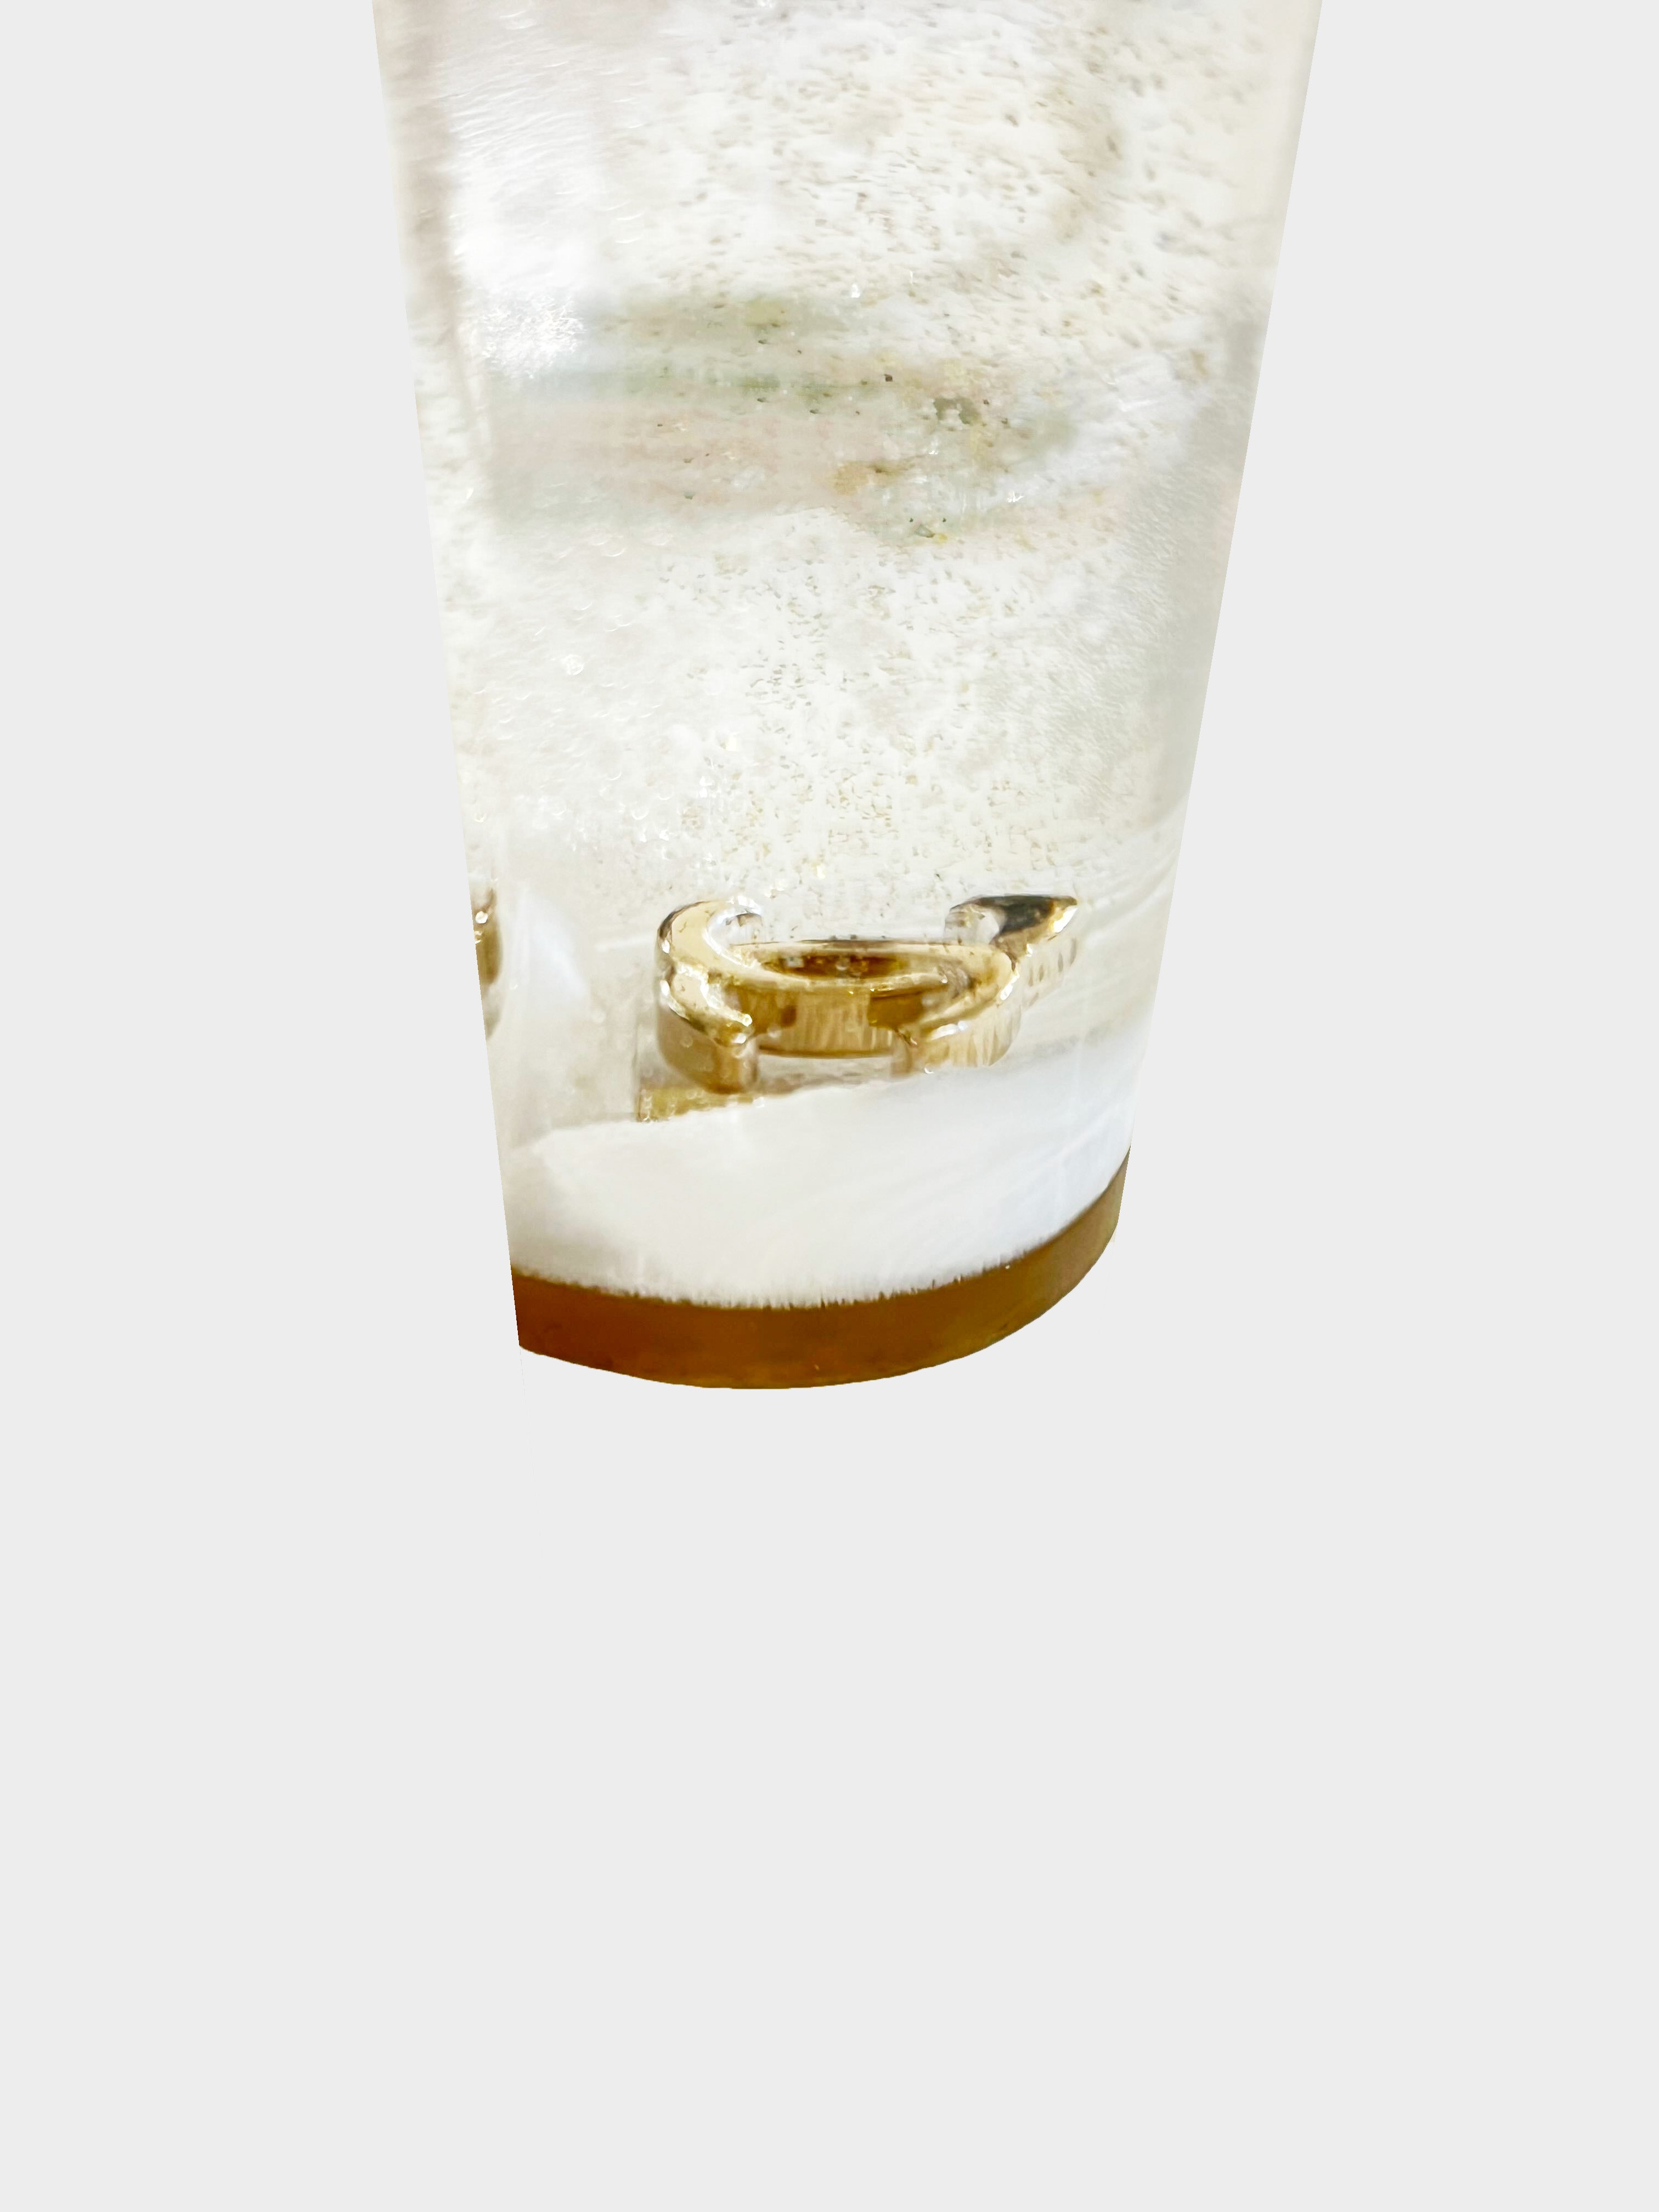 chanel shot glass